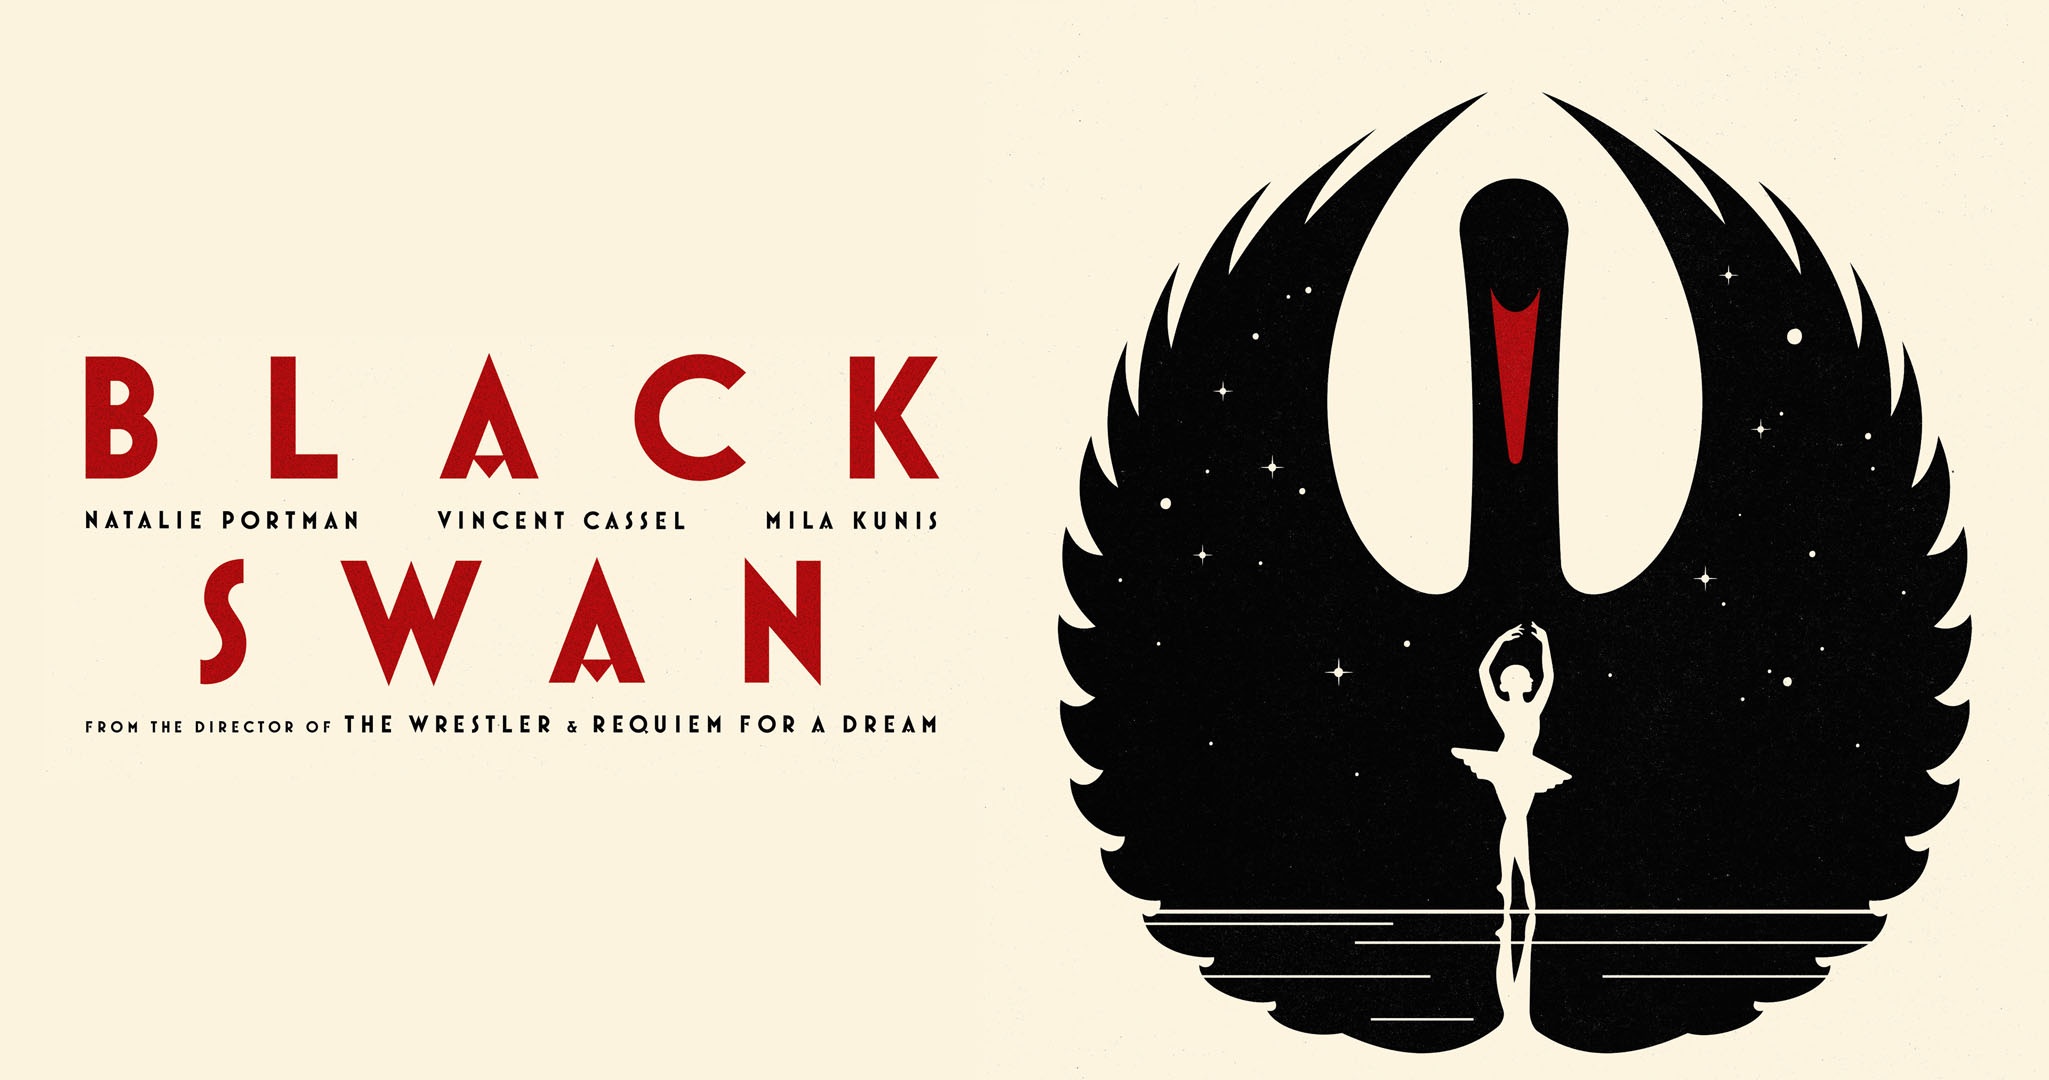 Black Swan Blu-ray Steelbook is being released a Zavvi Exclusive